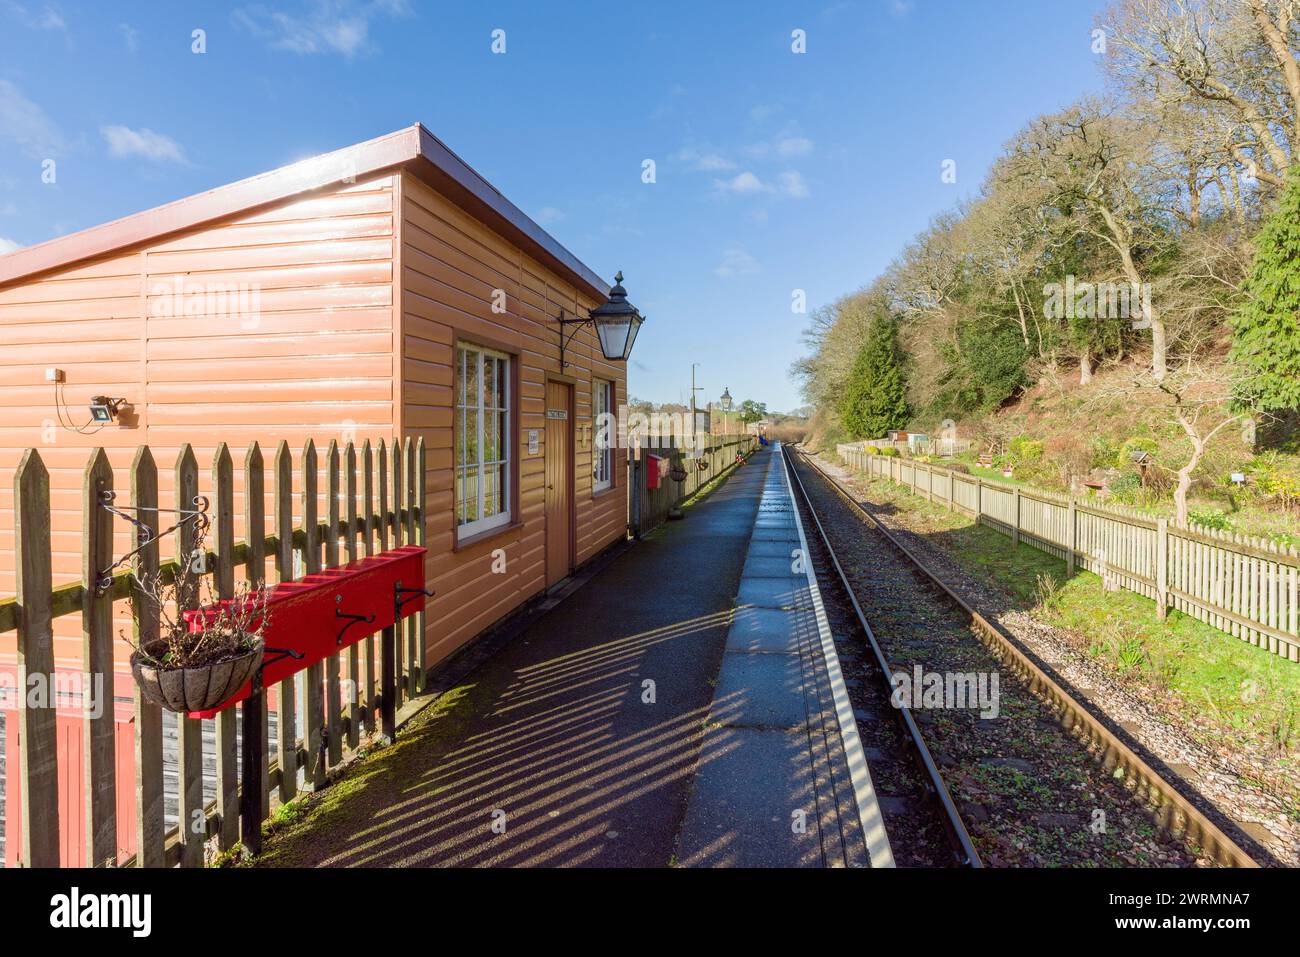 Stazione di Stogumber sulla West Somerset Railway, Inghilterra. Foto Stock